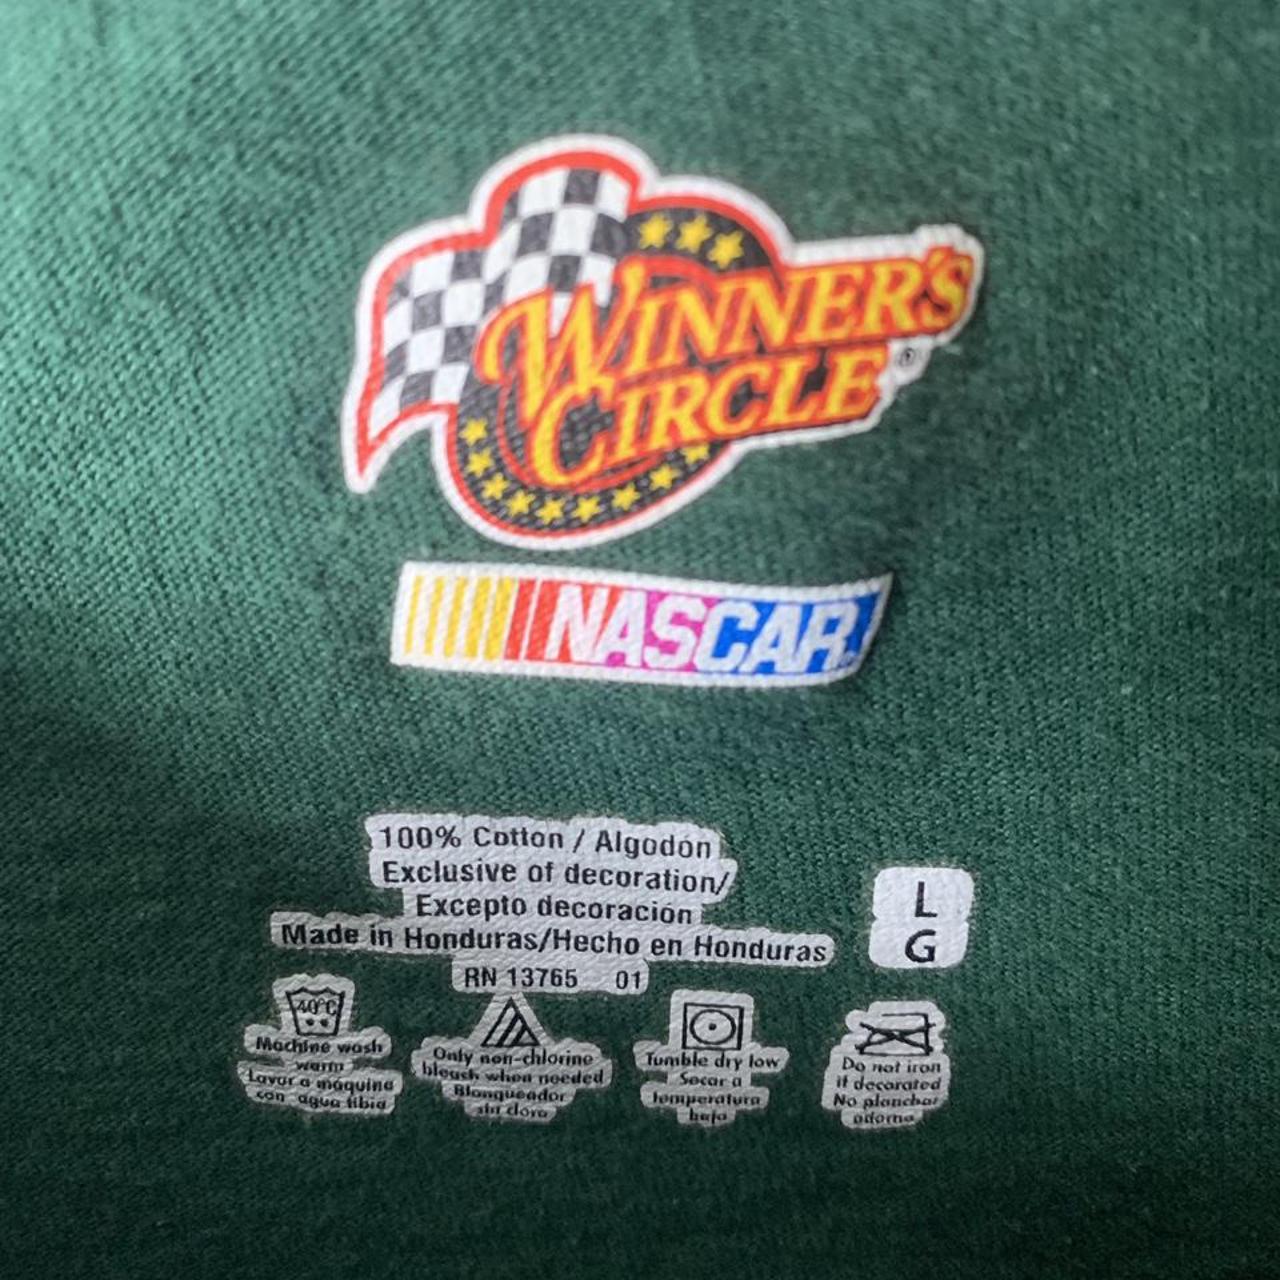 Product Image 4 - Item: Winners Circle NASCAR T-shirt